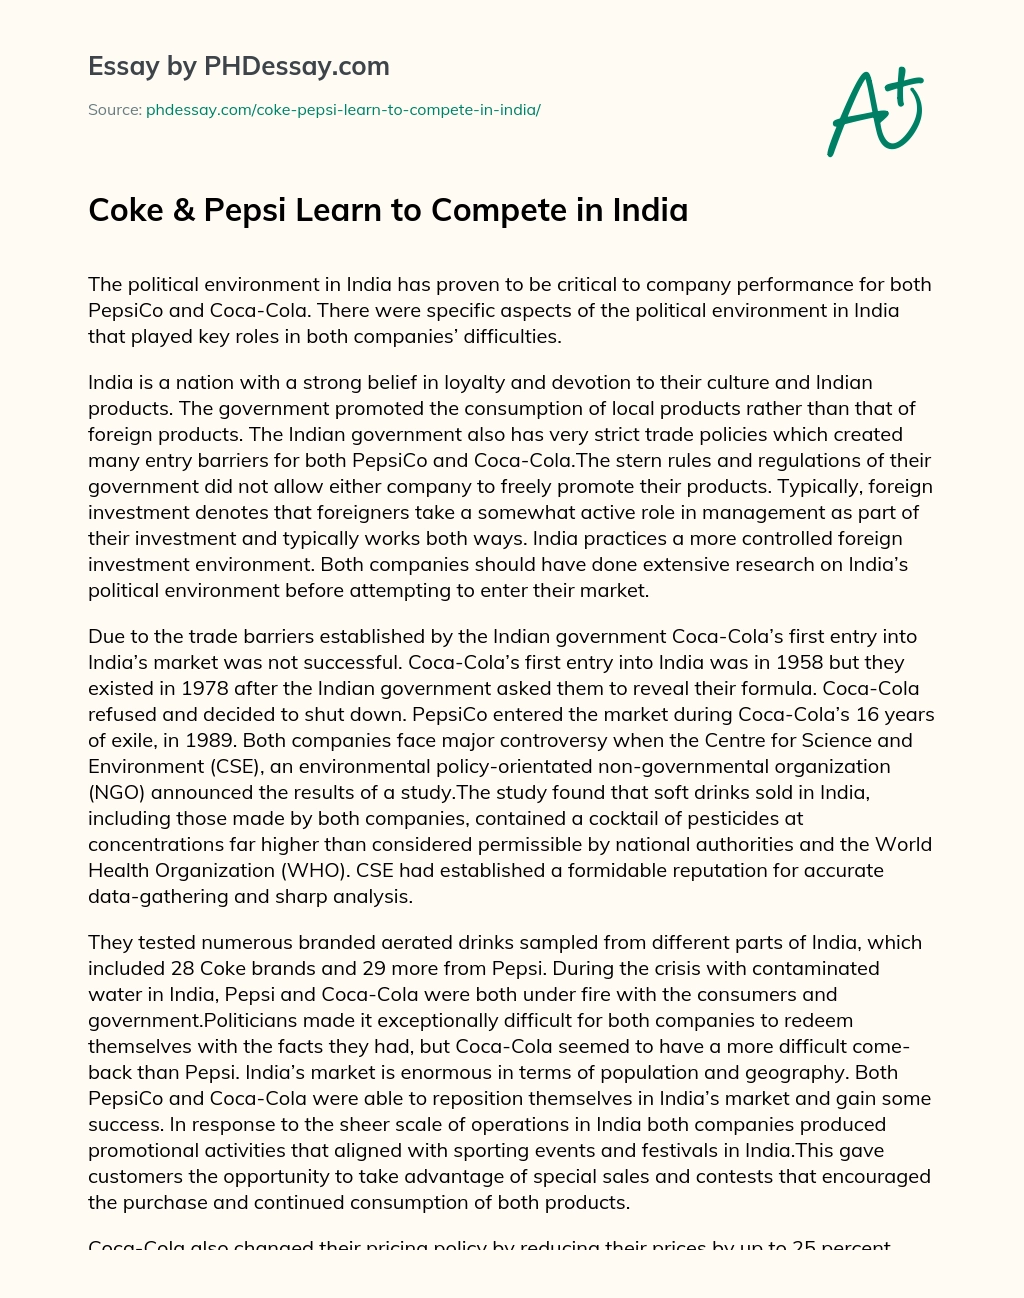 Coke & Pepsi Learn to Compete in India essay